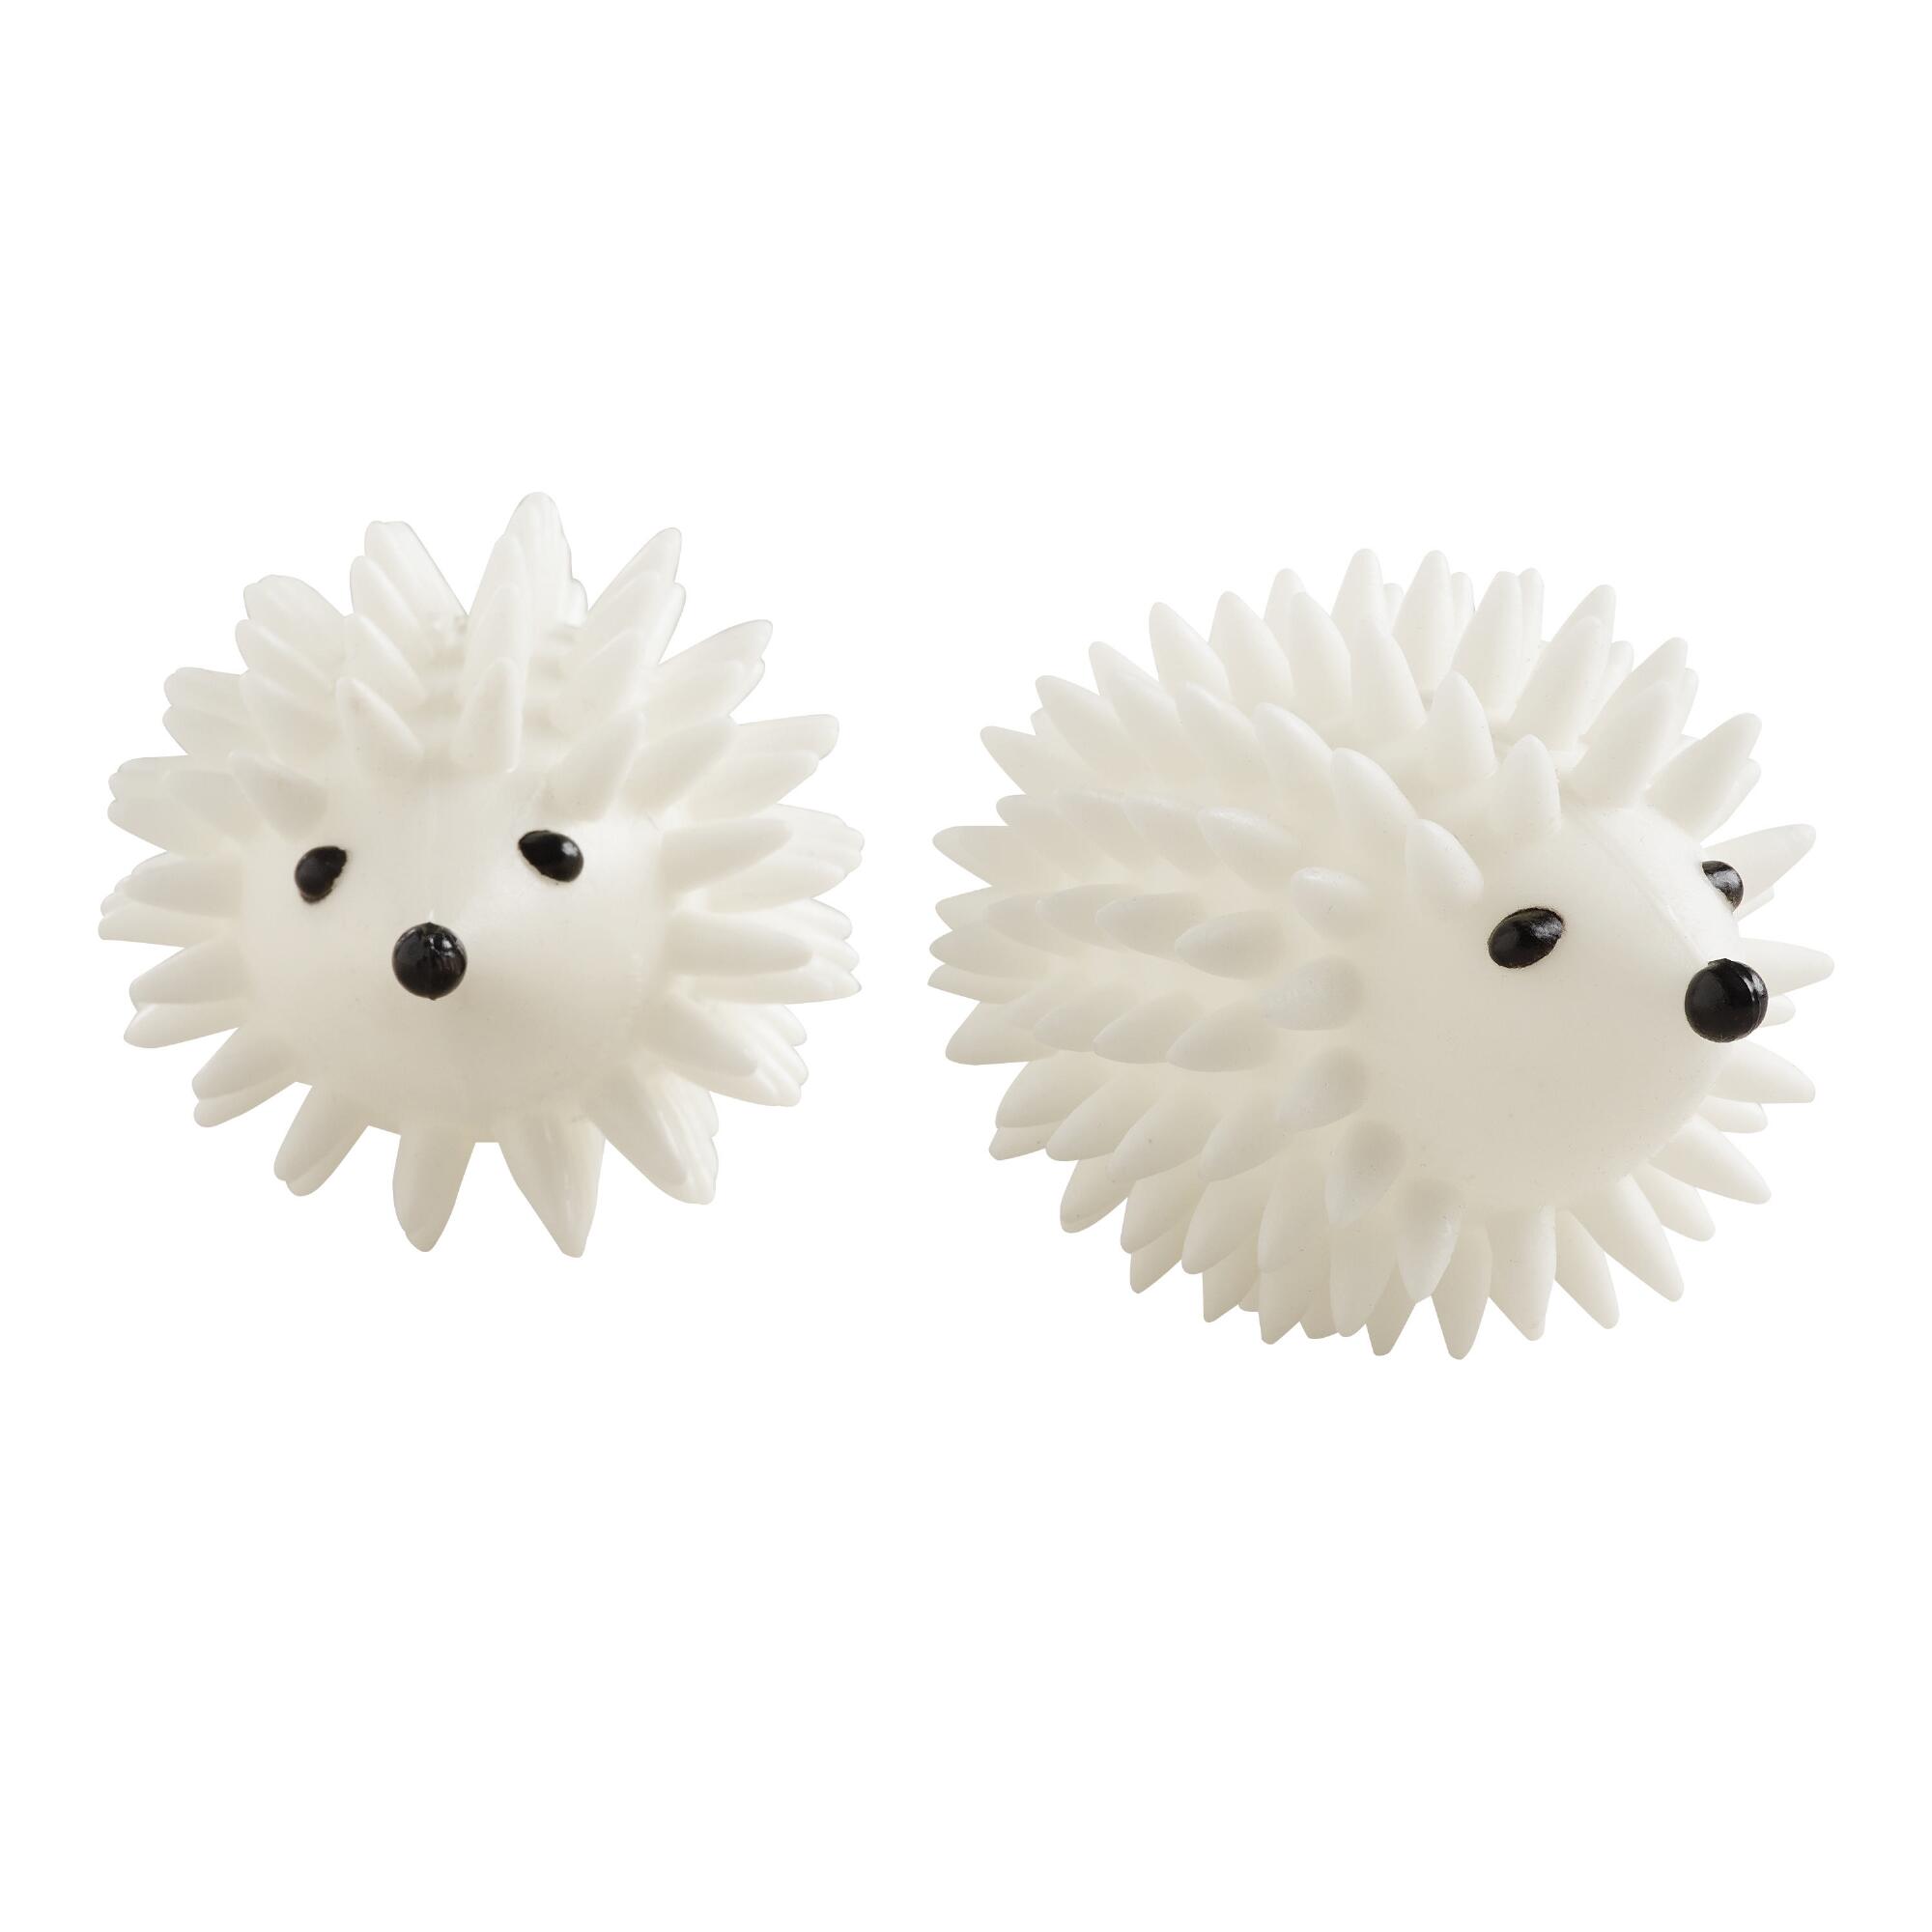 Hedgehog Dryer Balls, 2-Pack: White by World Market